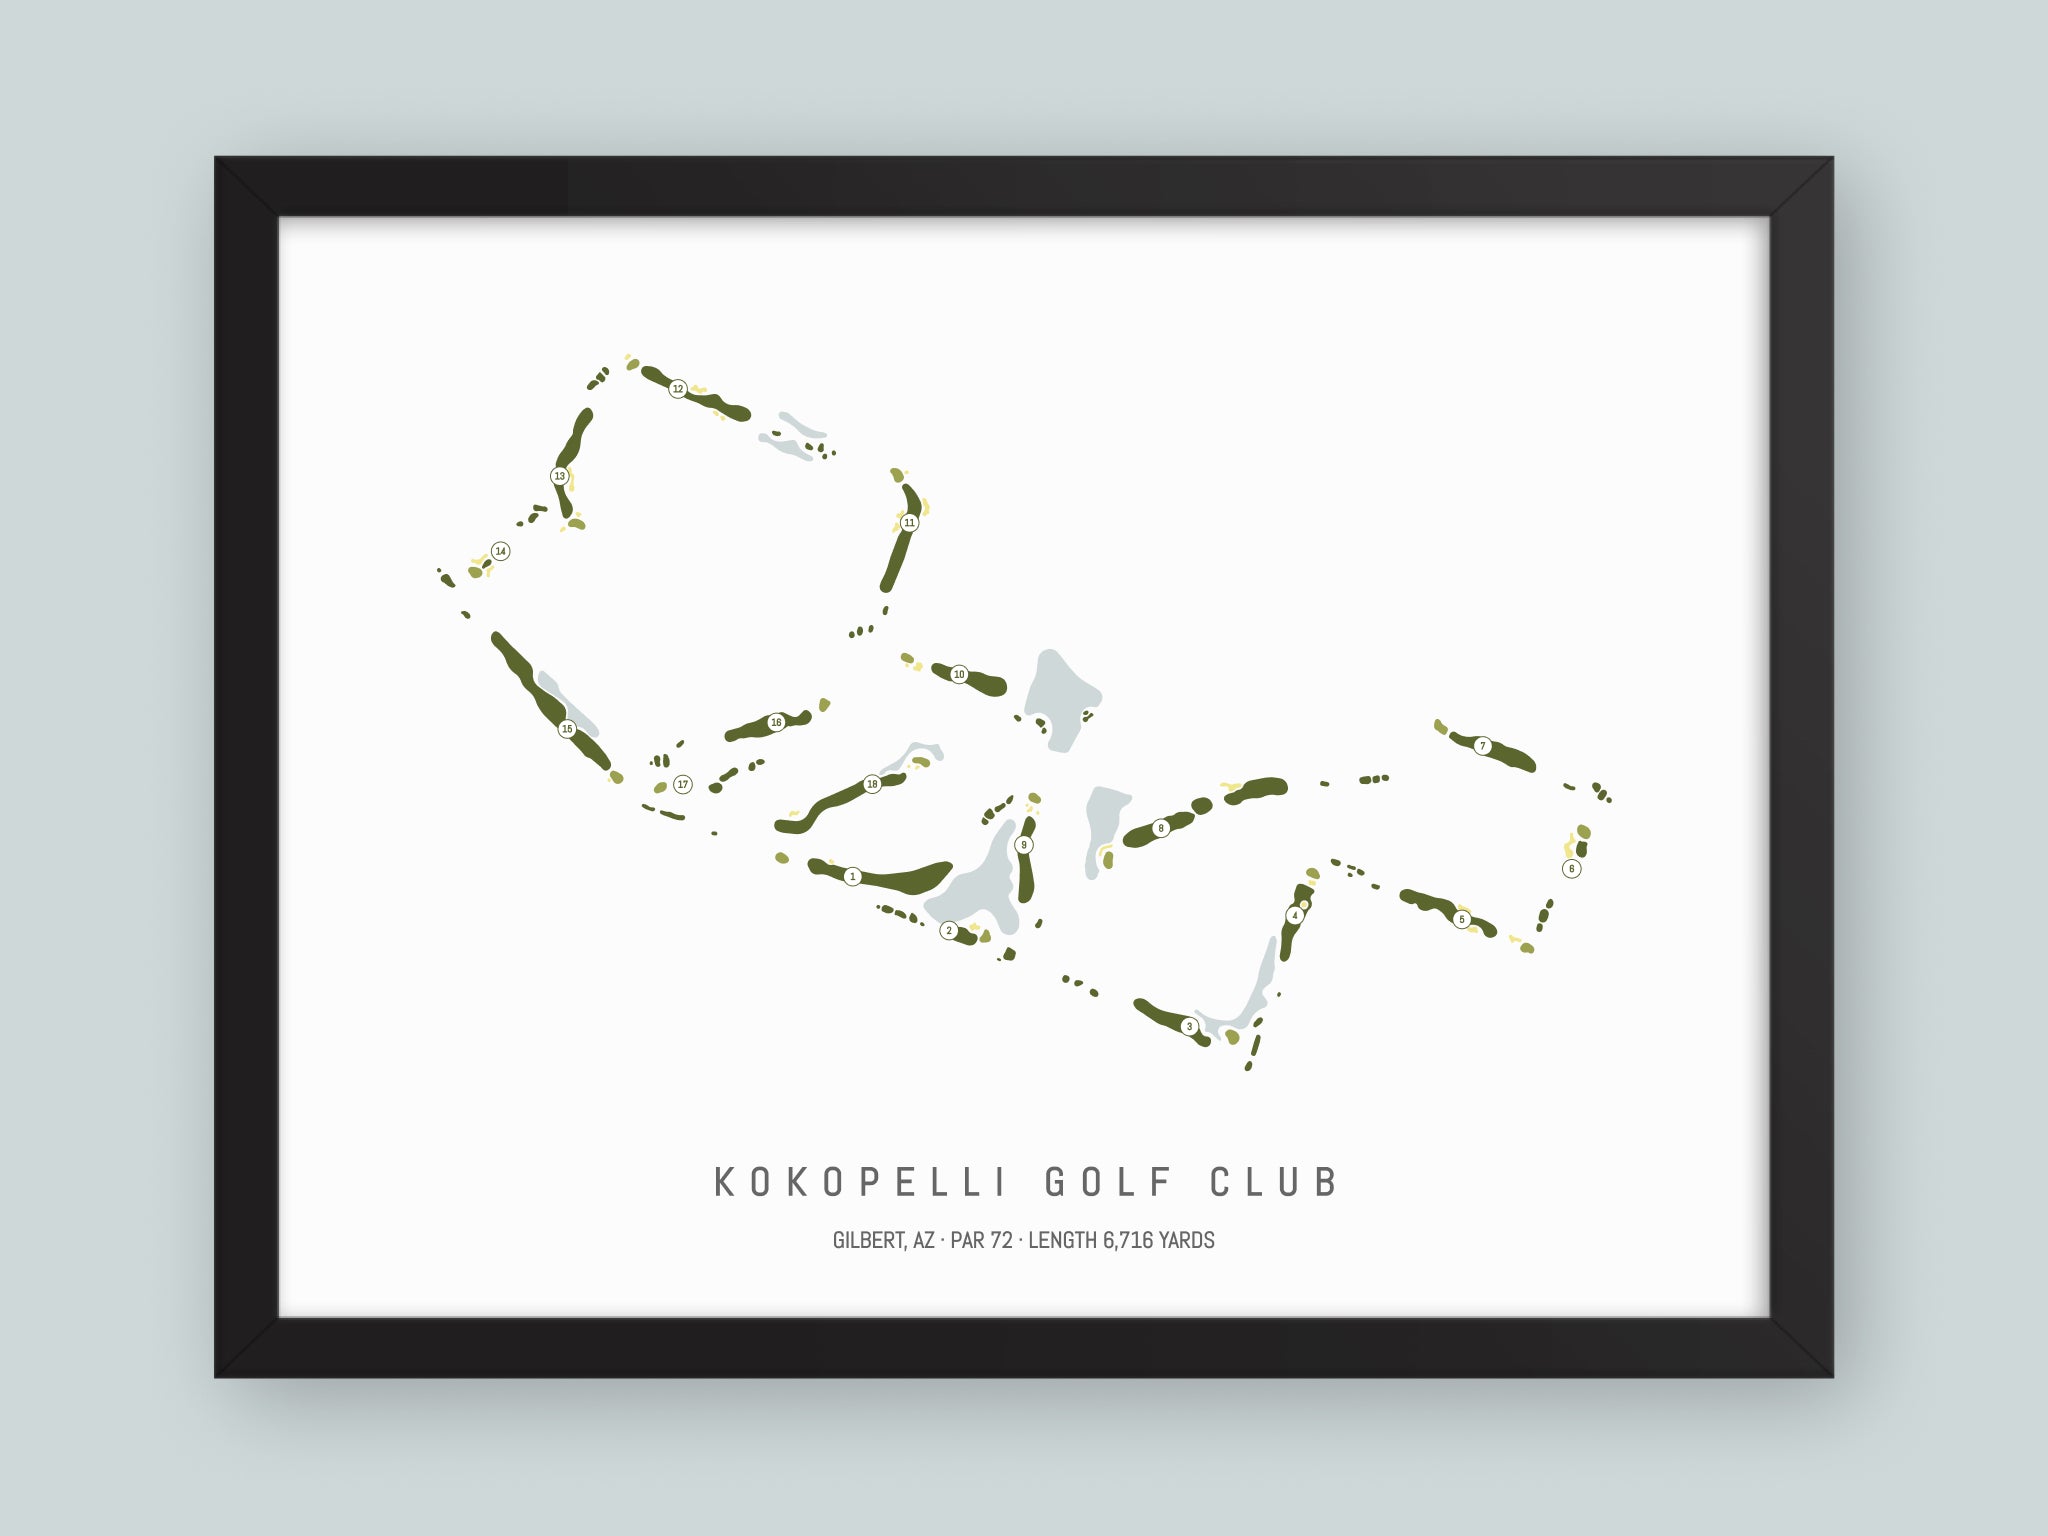 Kokopelli-Golf-Club-AZ--Black-Frame-24x18-With-Hole-Numbers